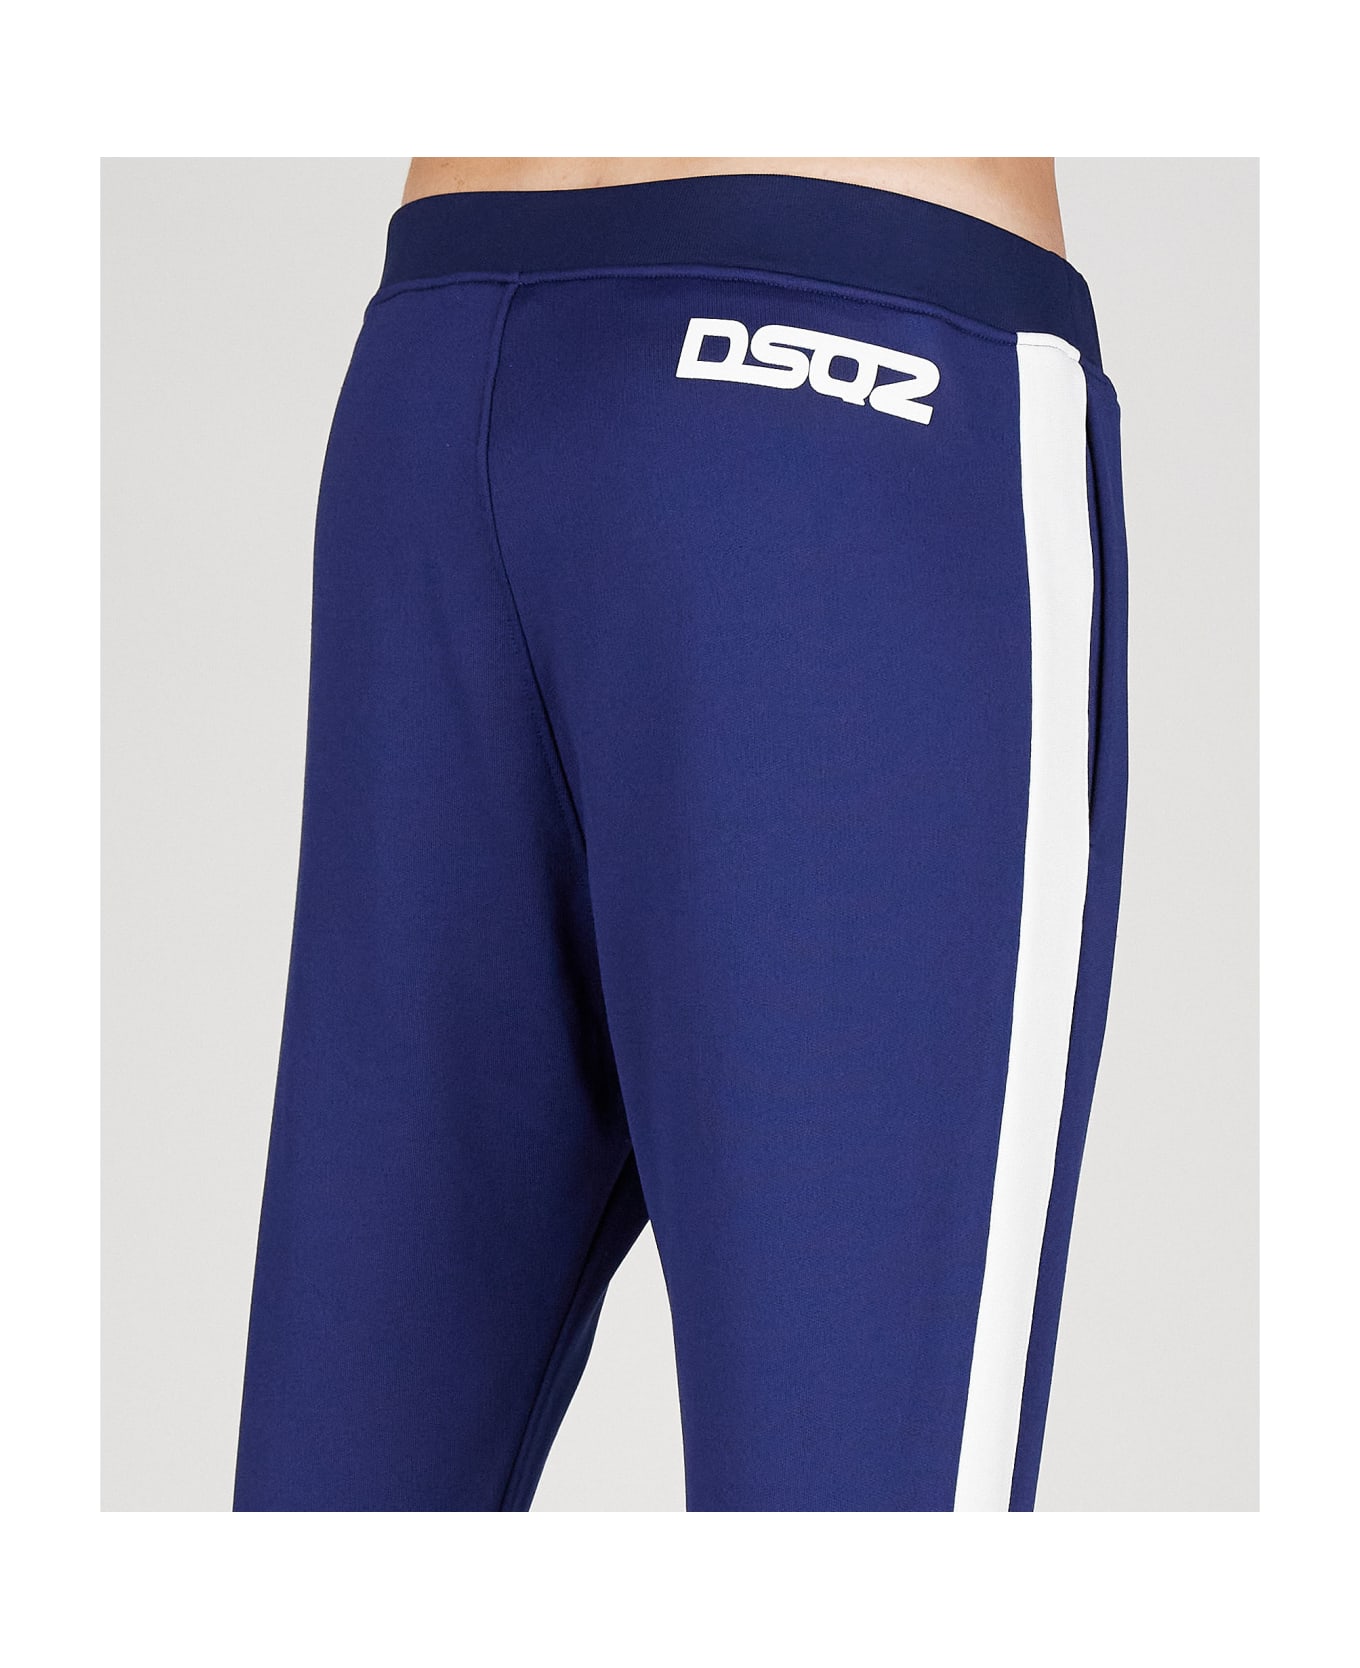 Dsquared2 Pants - Navy blue